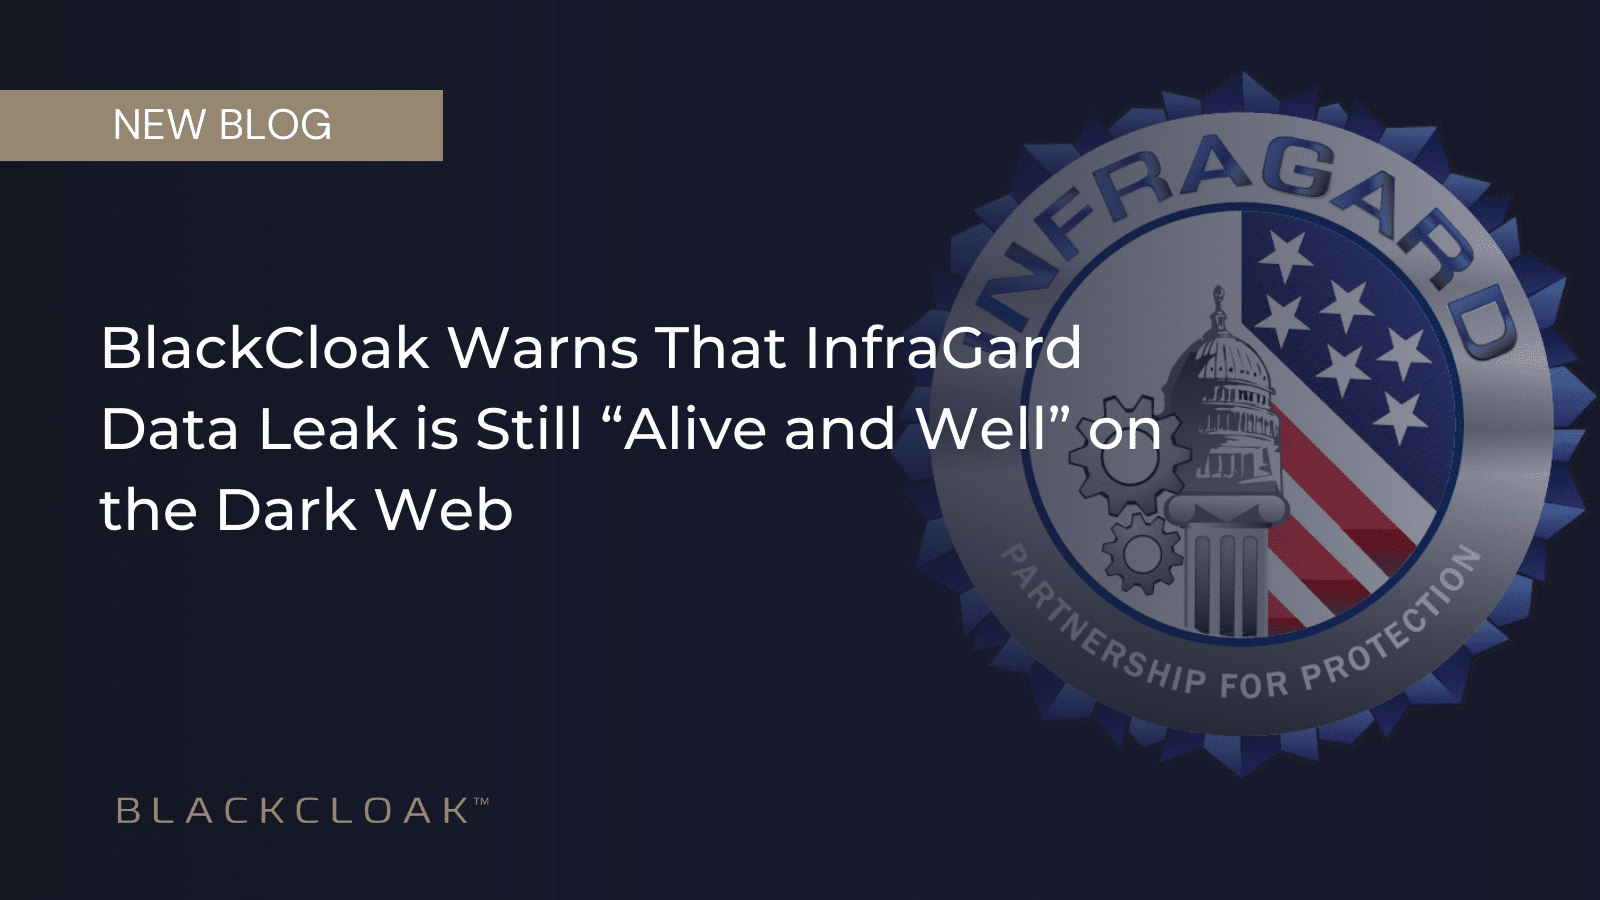 BlackCLoak warns that infraGard data leak is still "alive and well" on the dark web.